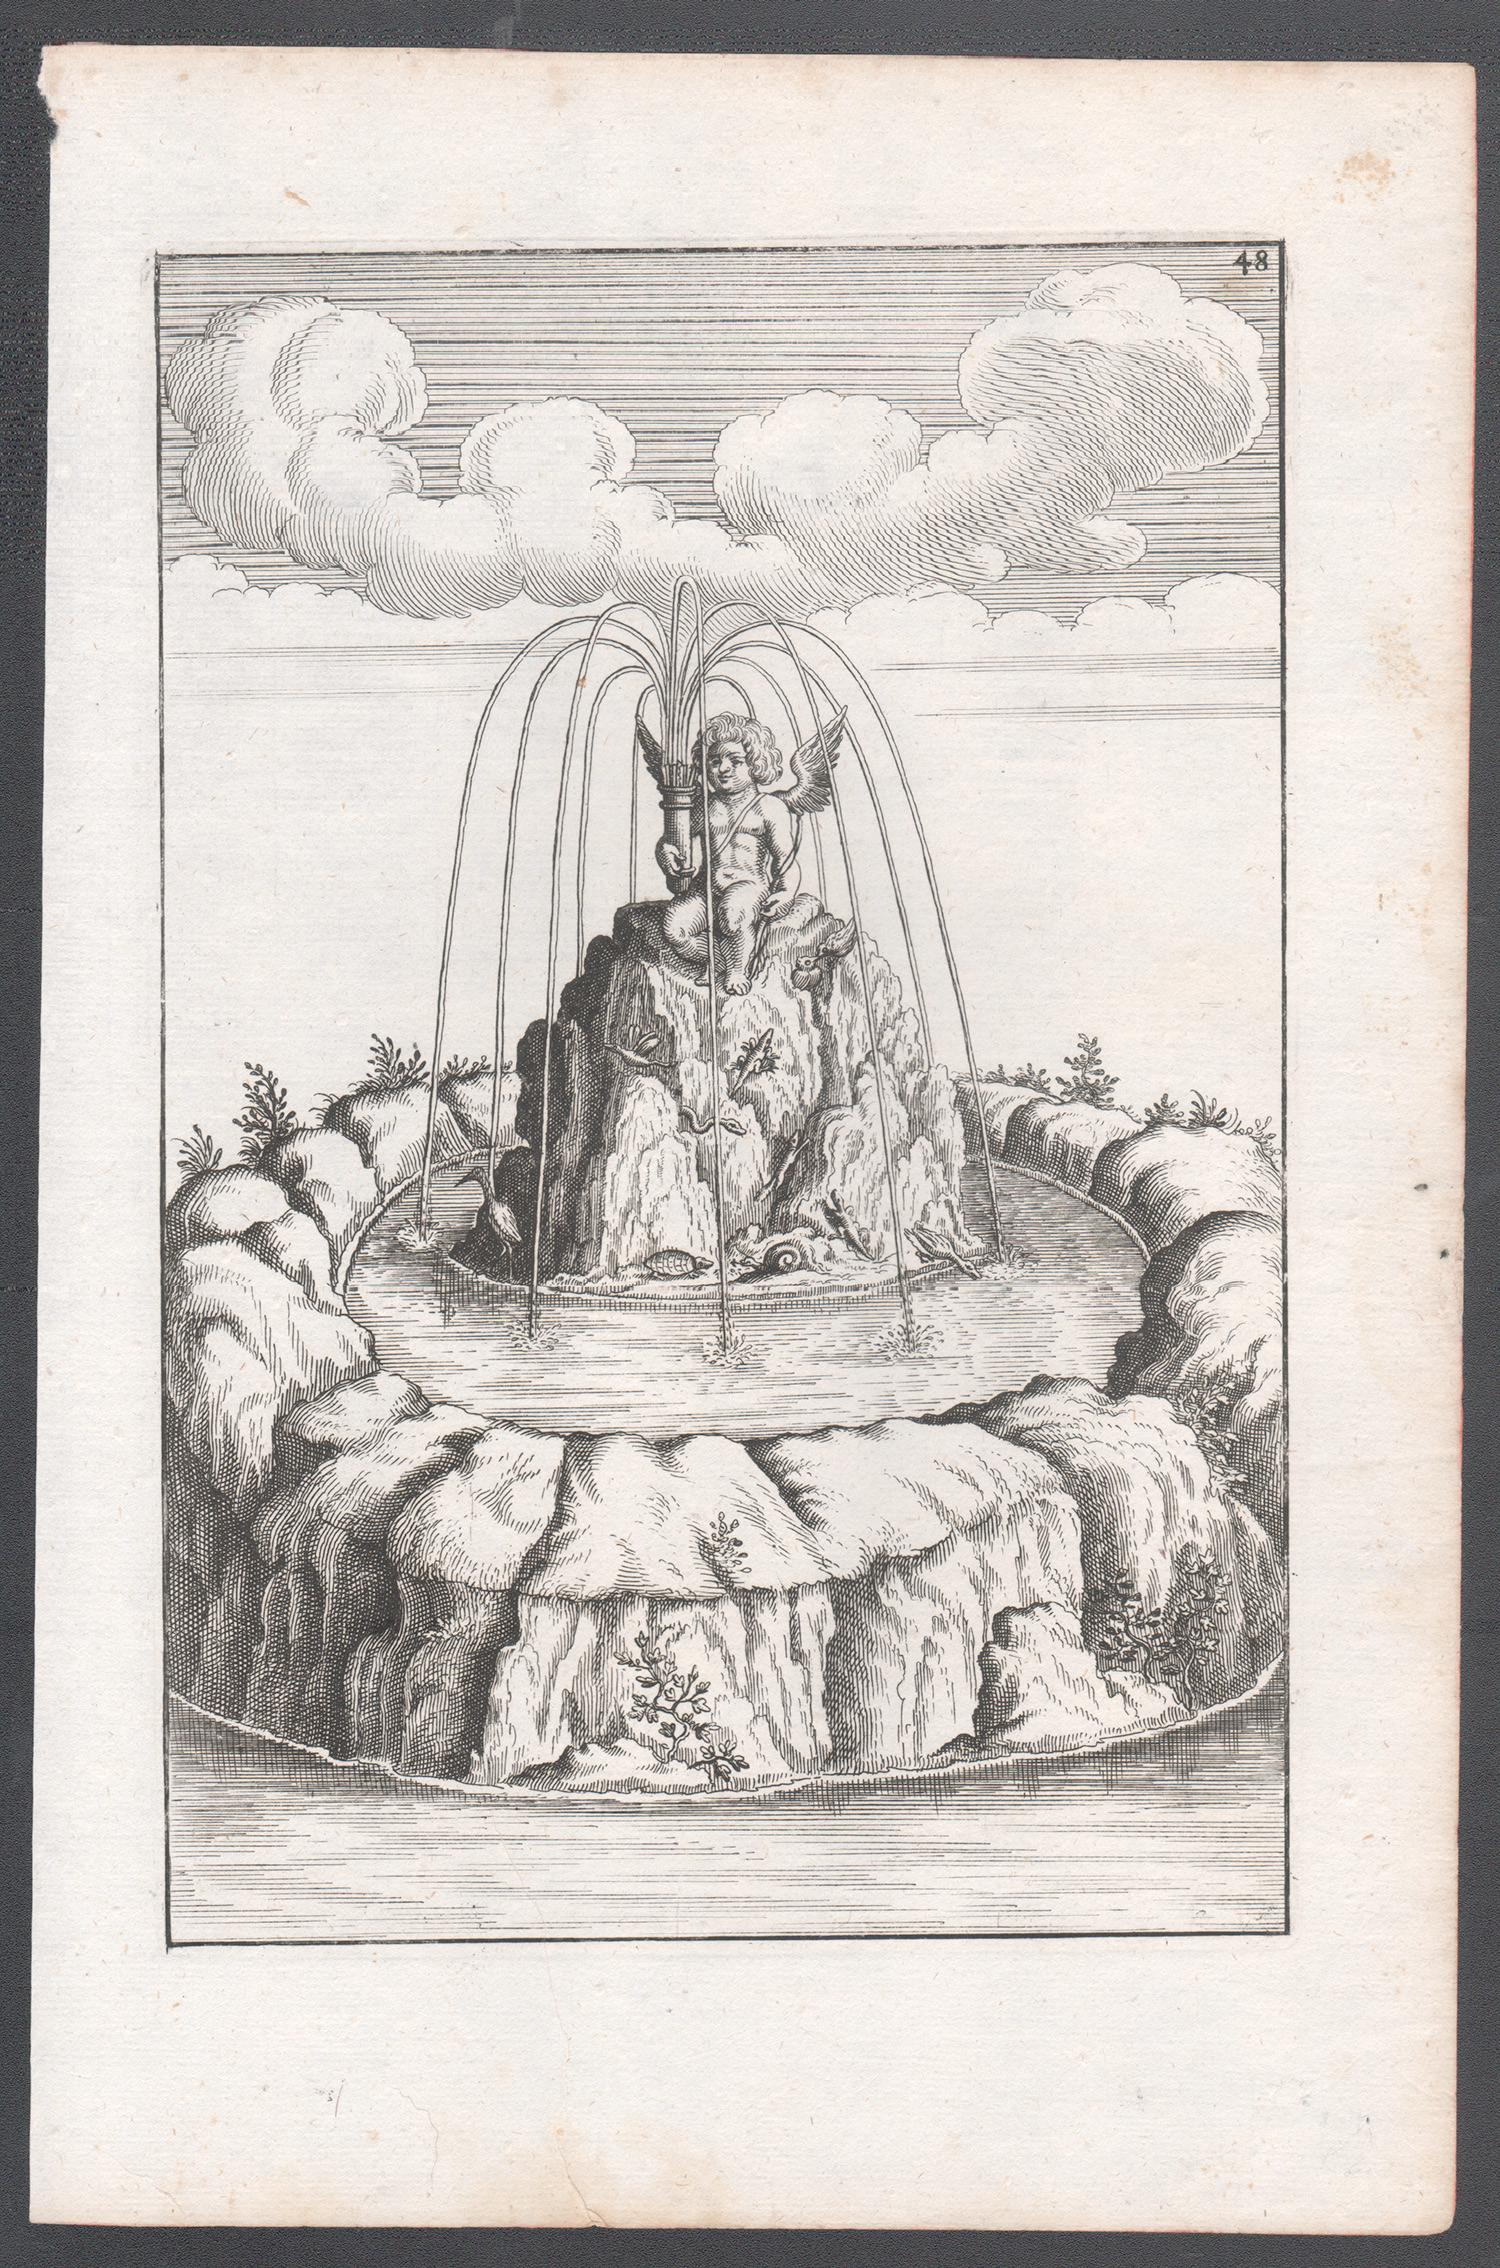 Baroque 17th century German fountain design engraving print by Boeckler - Print by Georg Andreas Böckler